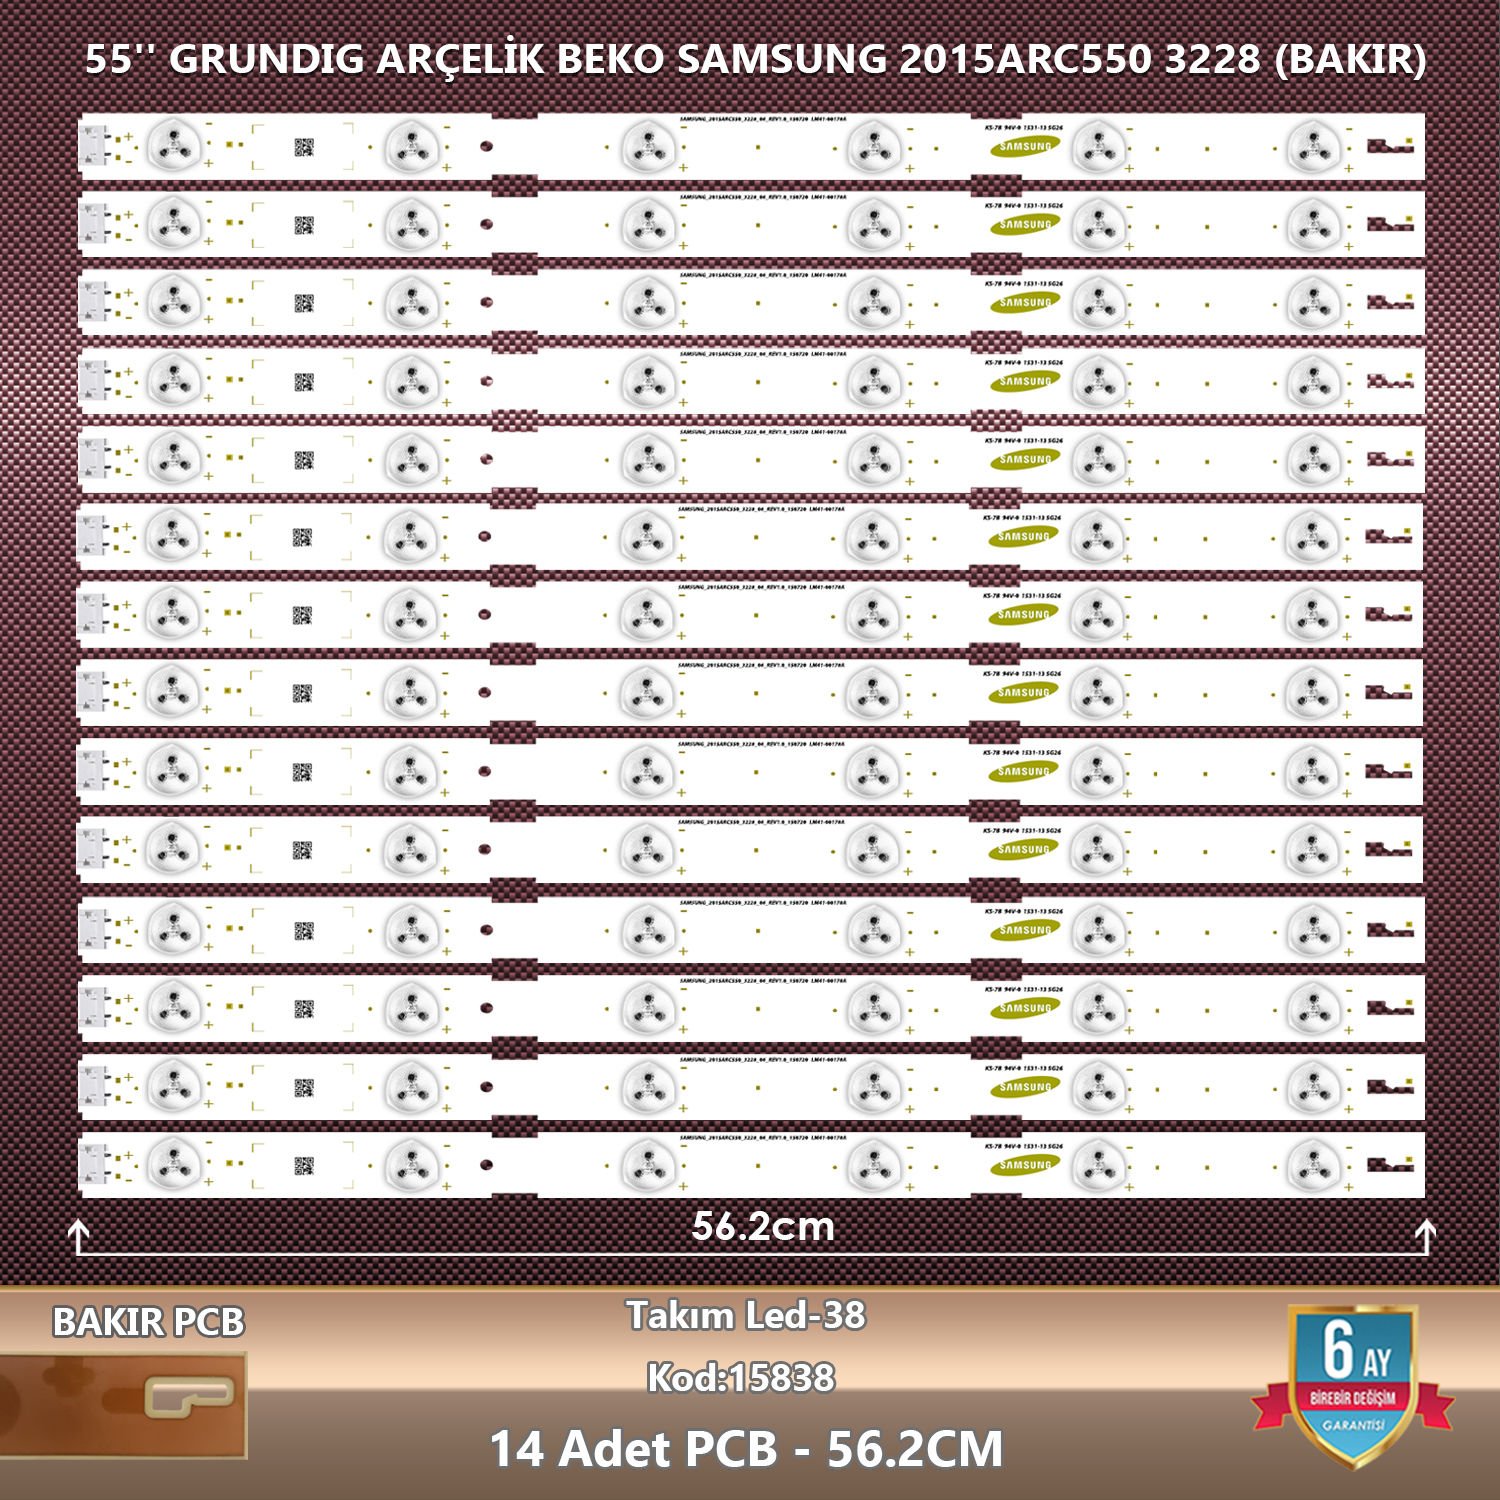 ÇIKMA TAKIM LED-38 (14XPCB) 55 GRUNDIG ARÇELİK BEKO SAMSUNG 2015ARC550 3228